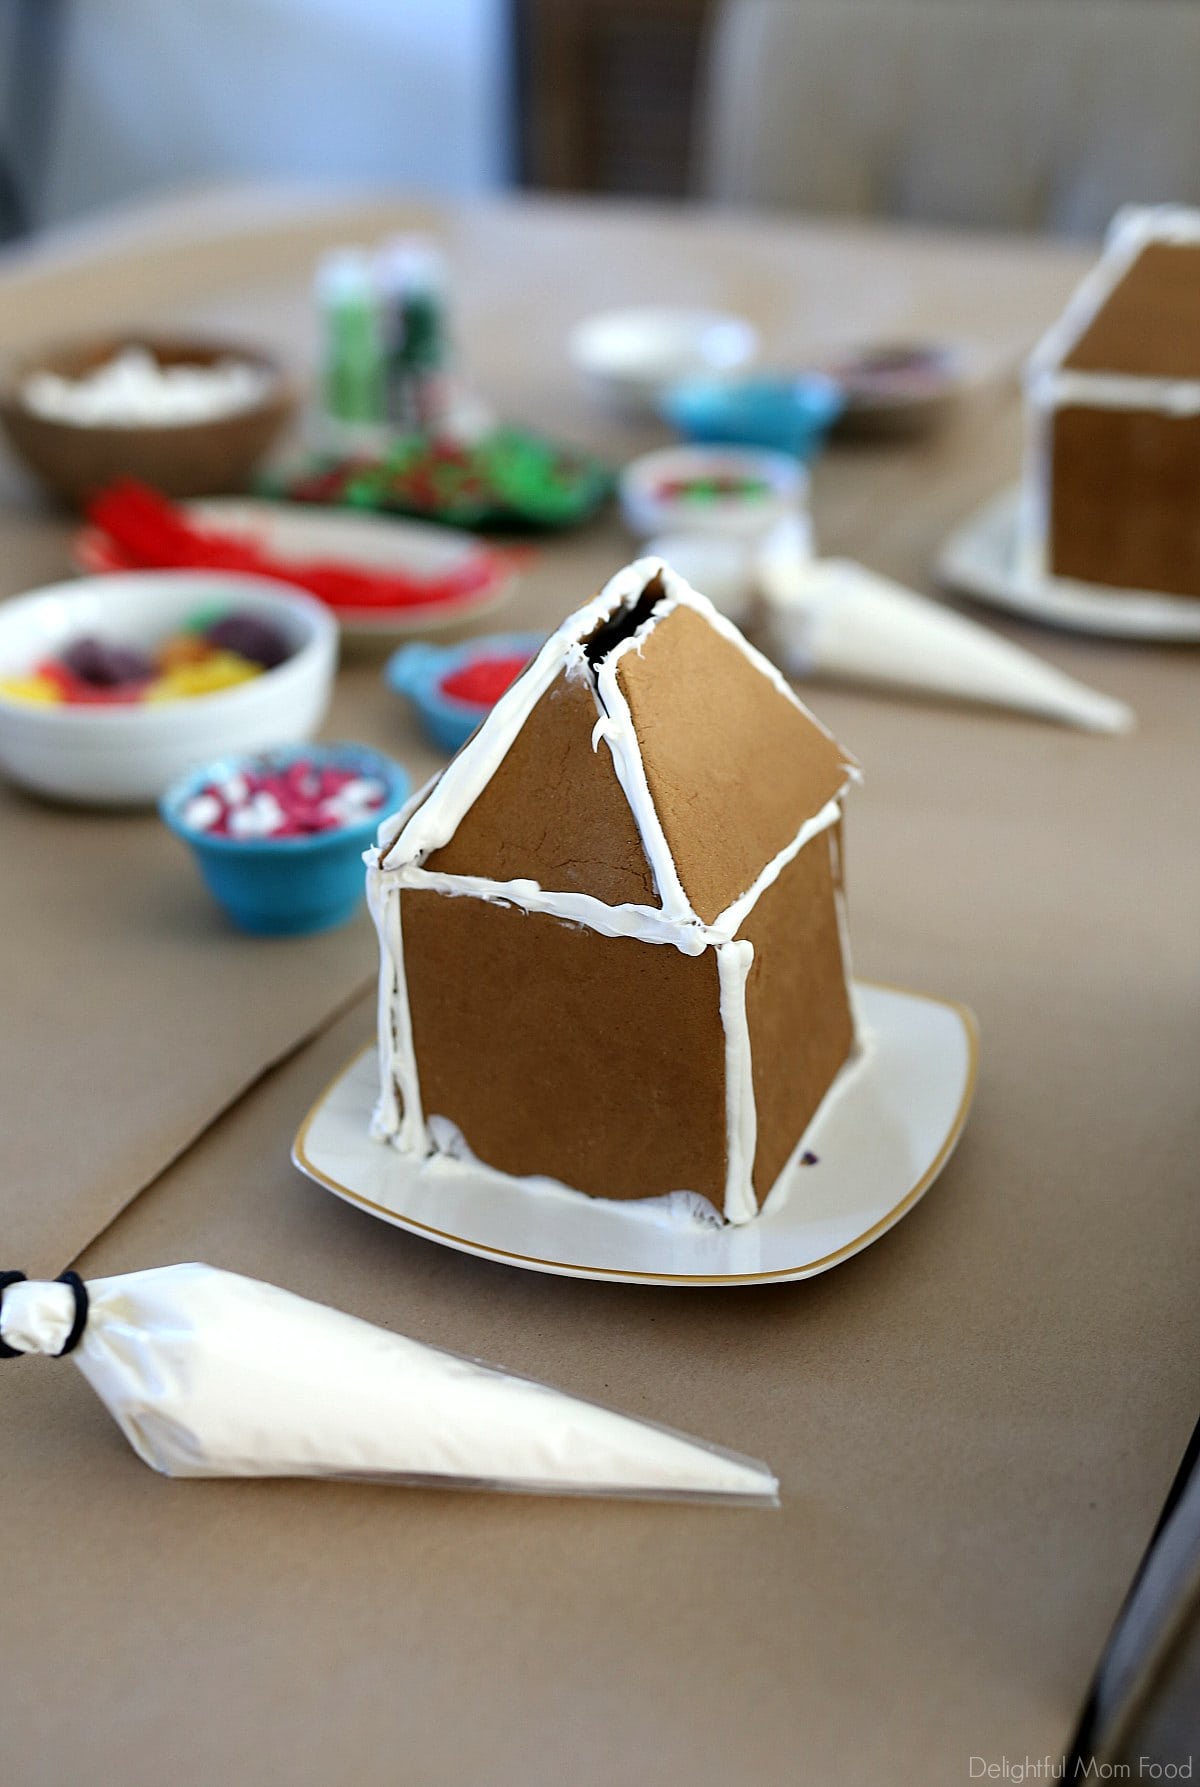 https://delightfulmomfood.com/wp-content/uploads/2020/12/how-to-make-a-gingerbread-house.jpg